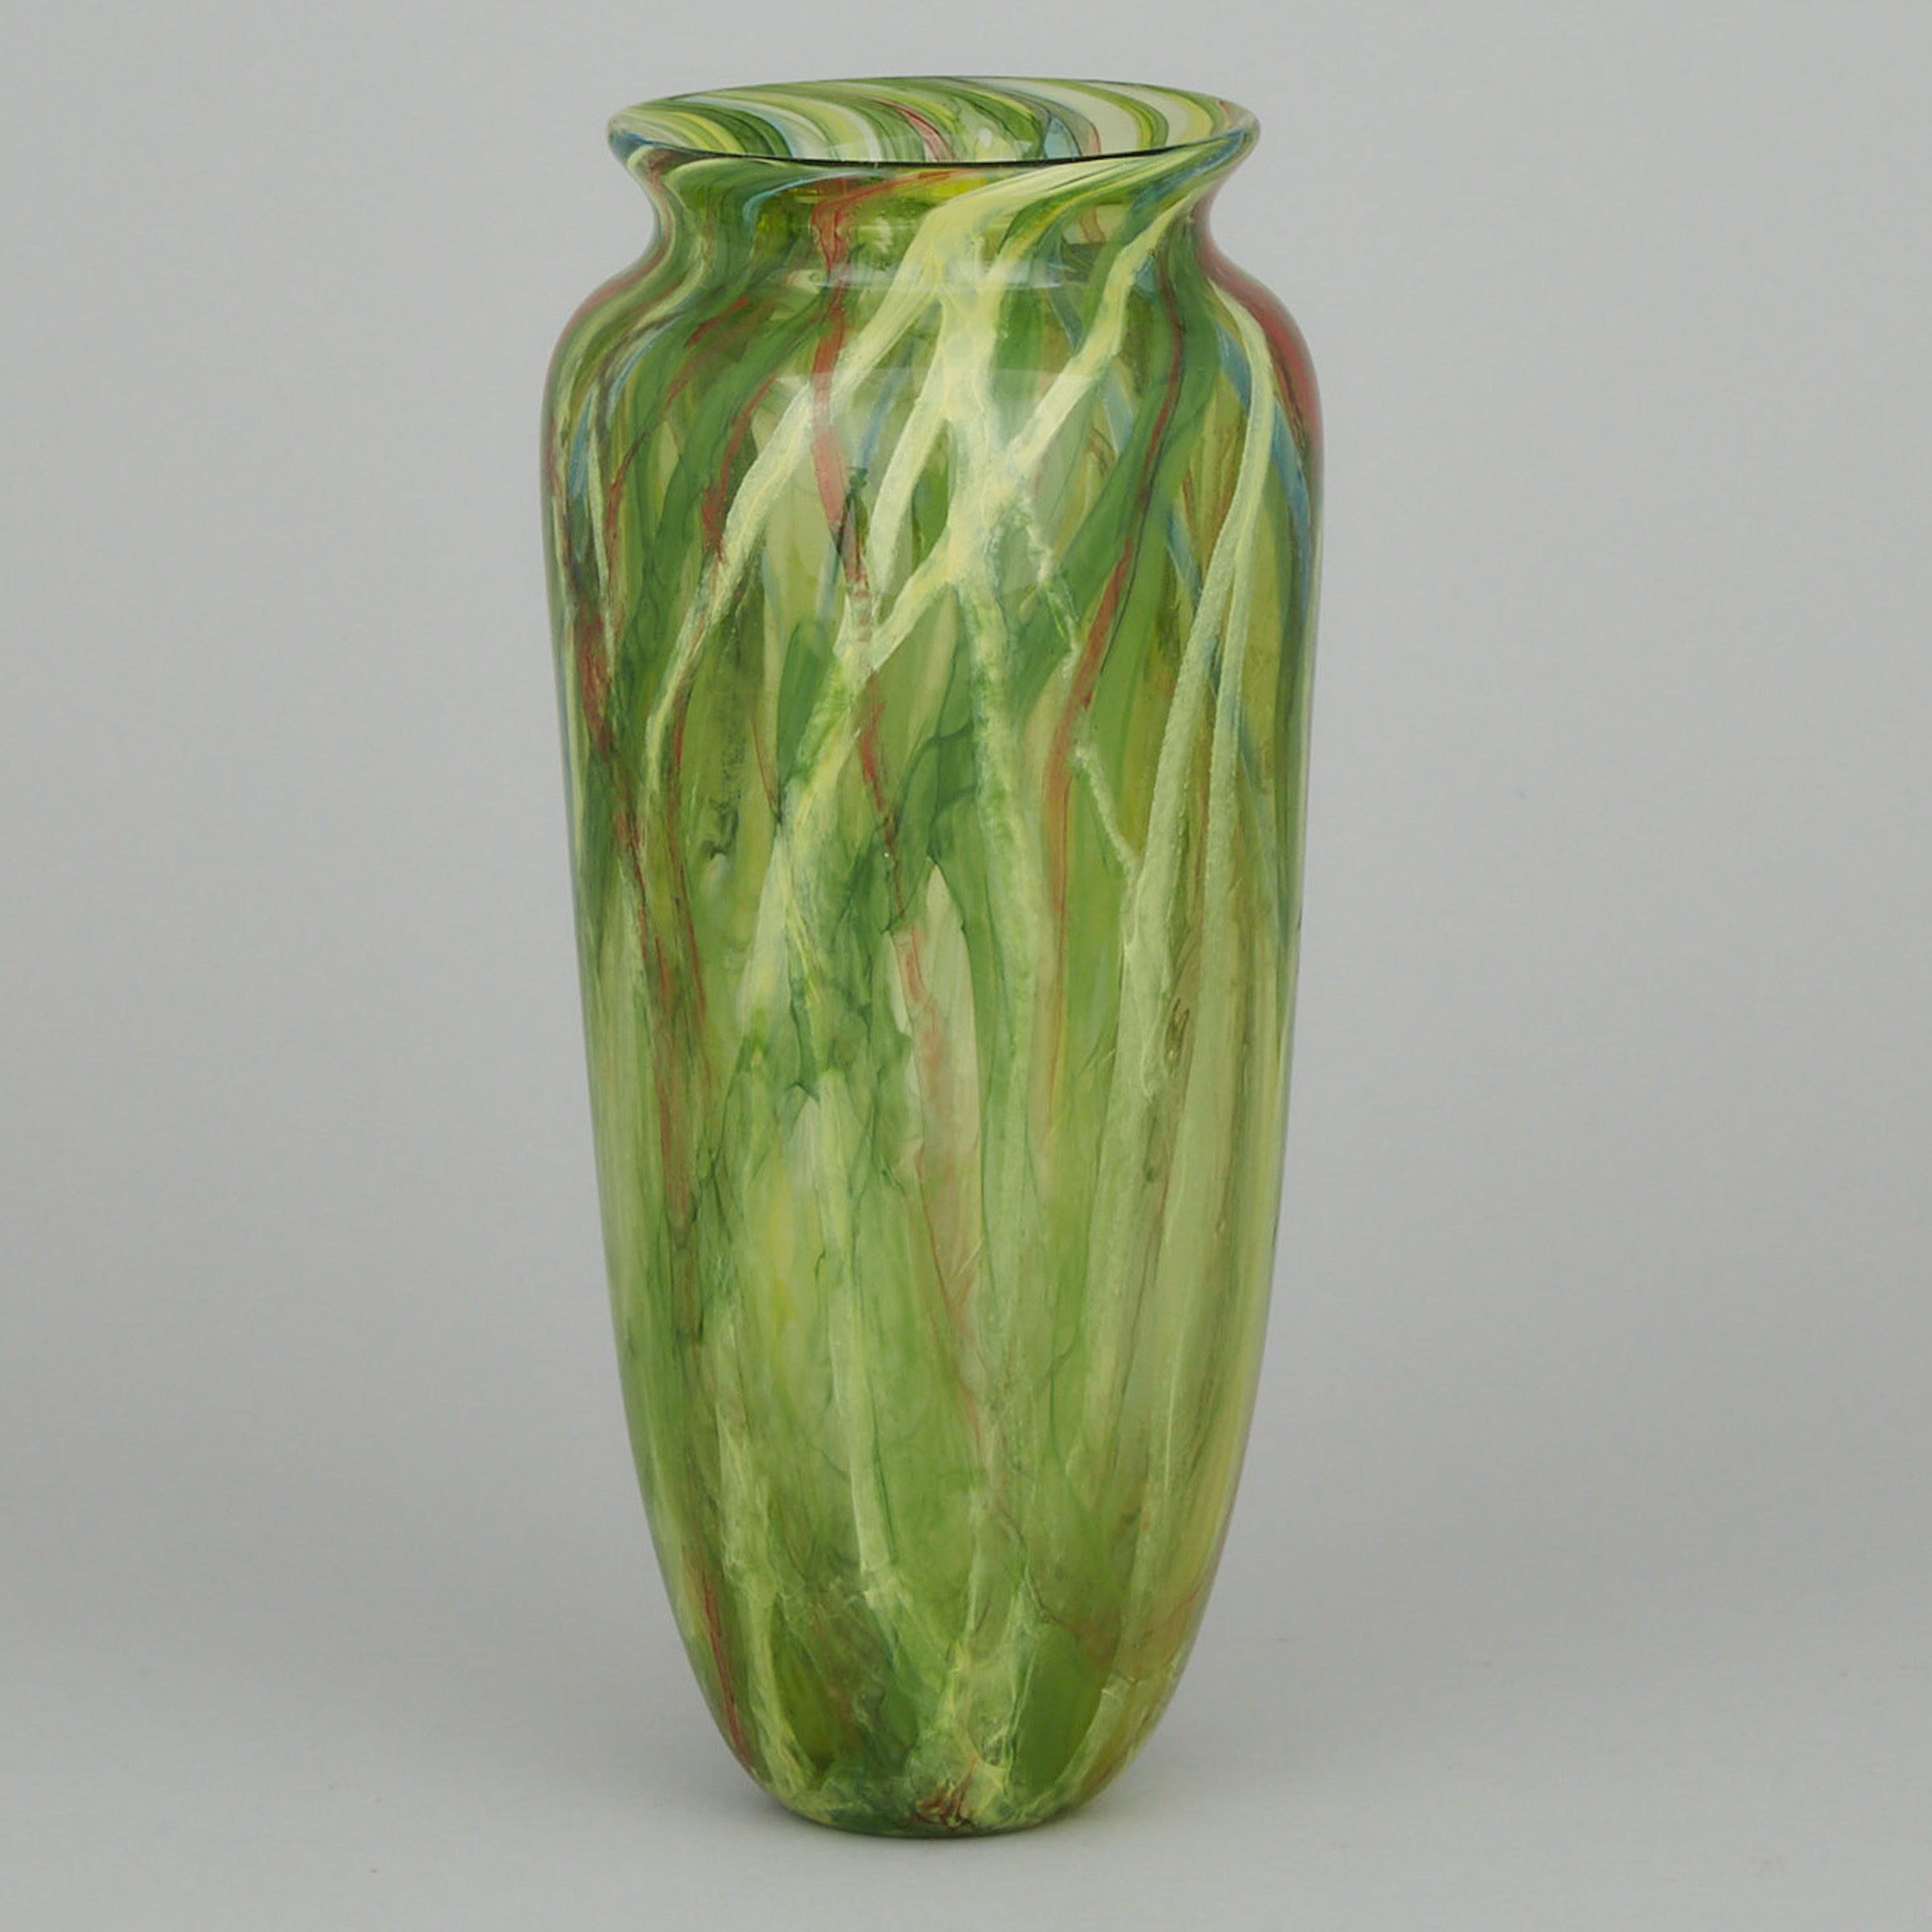 Daniel Crichton (Canadian, 1950-2002), Internally Decorated Green Glass Vase, 1976